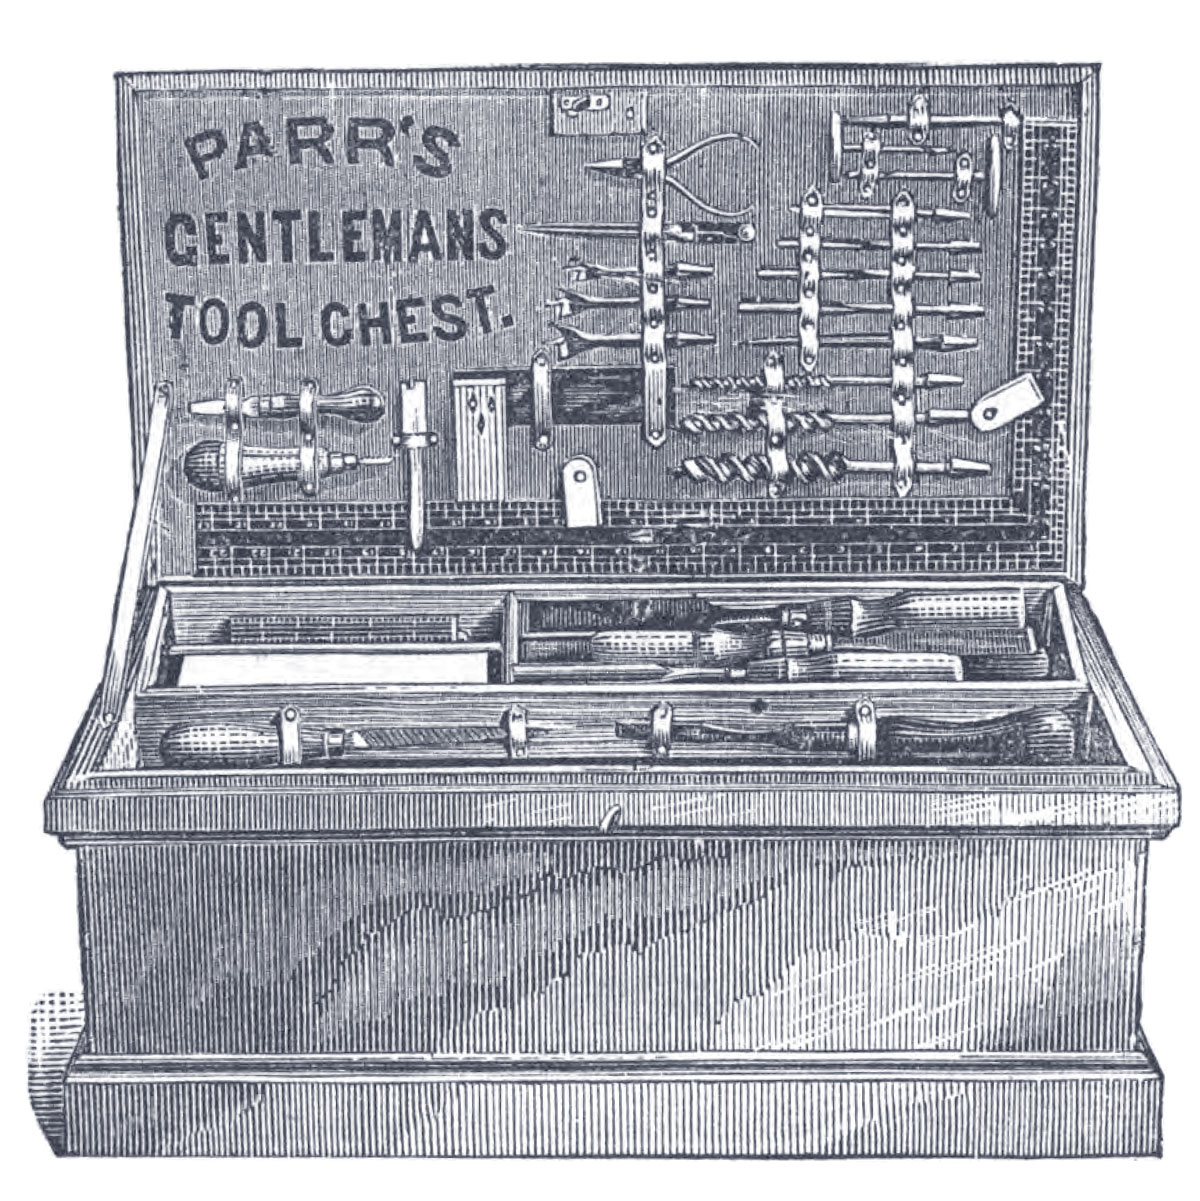 parrs_gentlemans_tool_chest